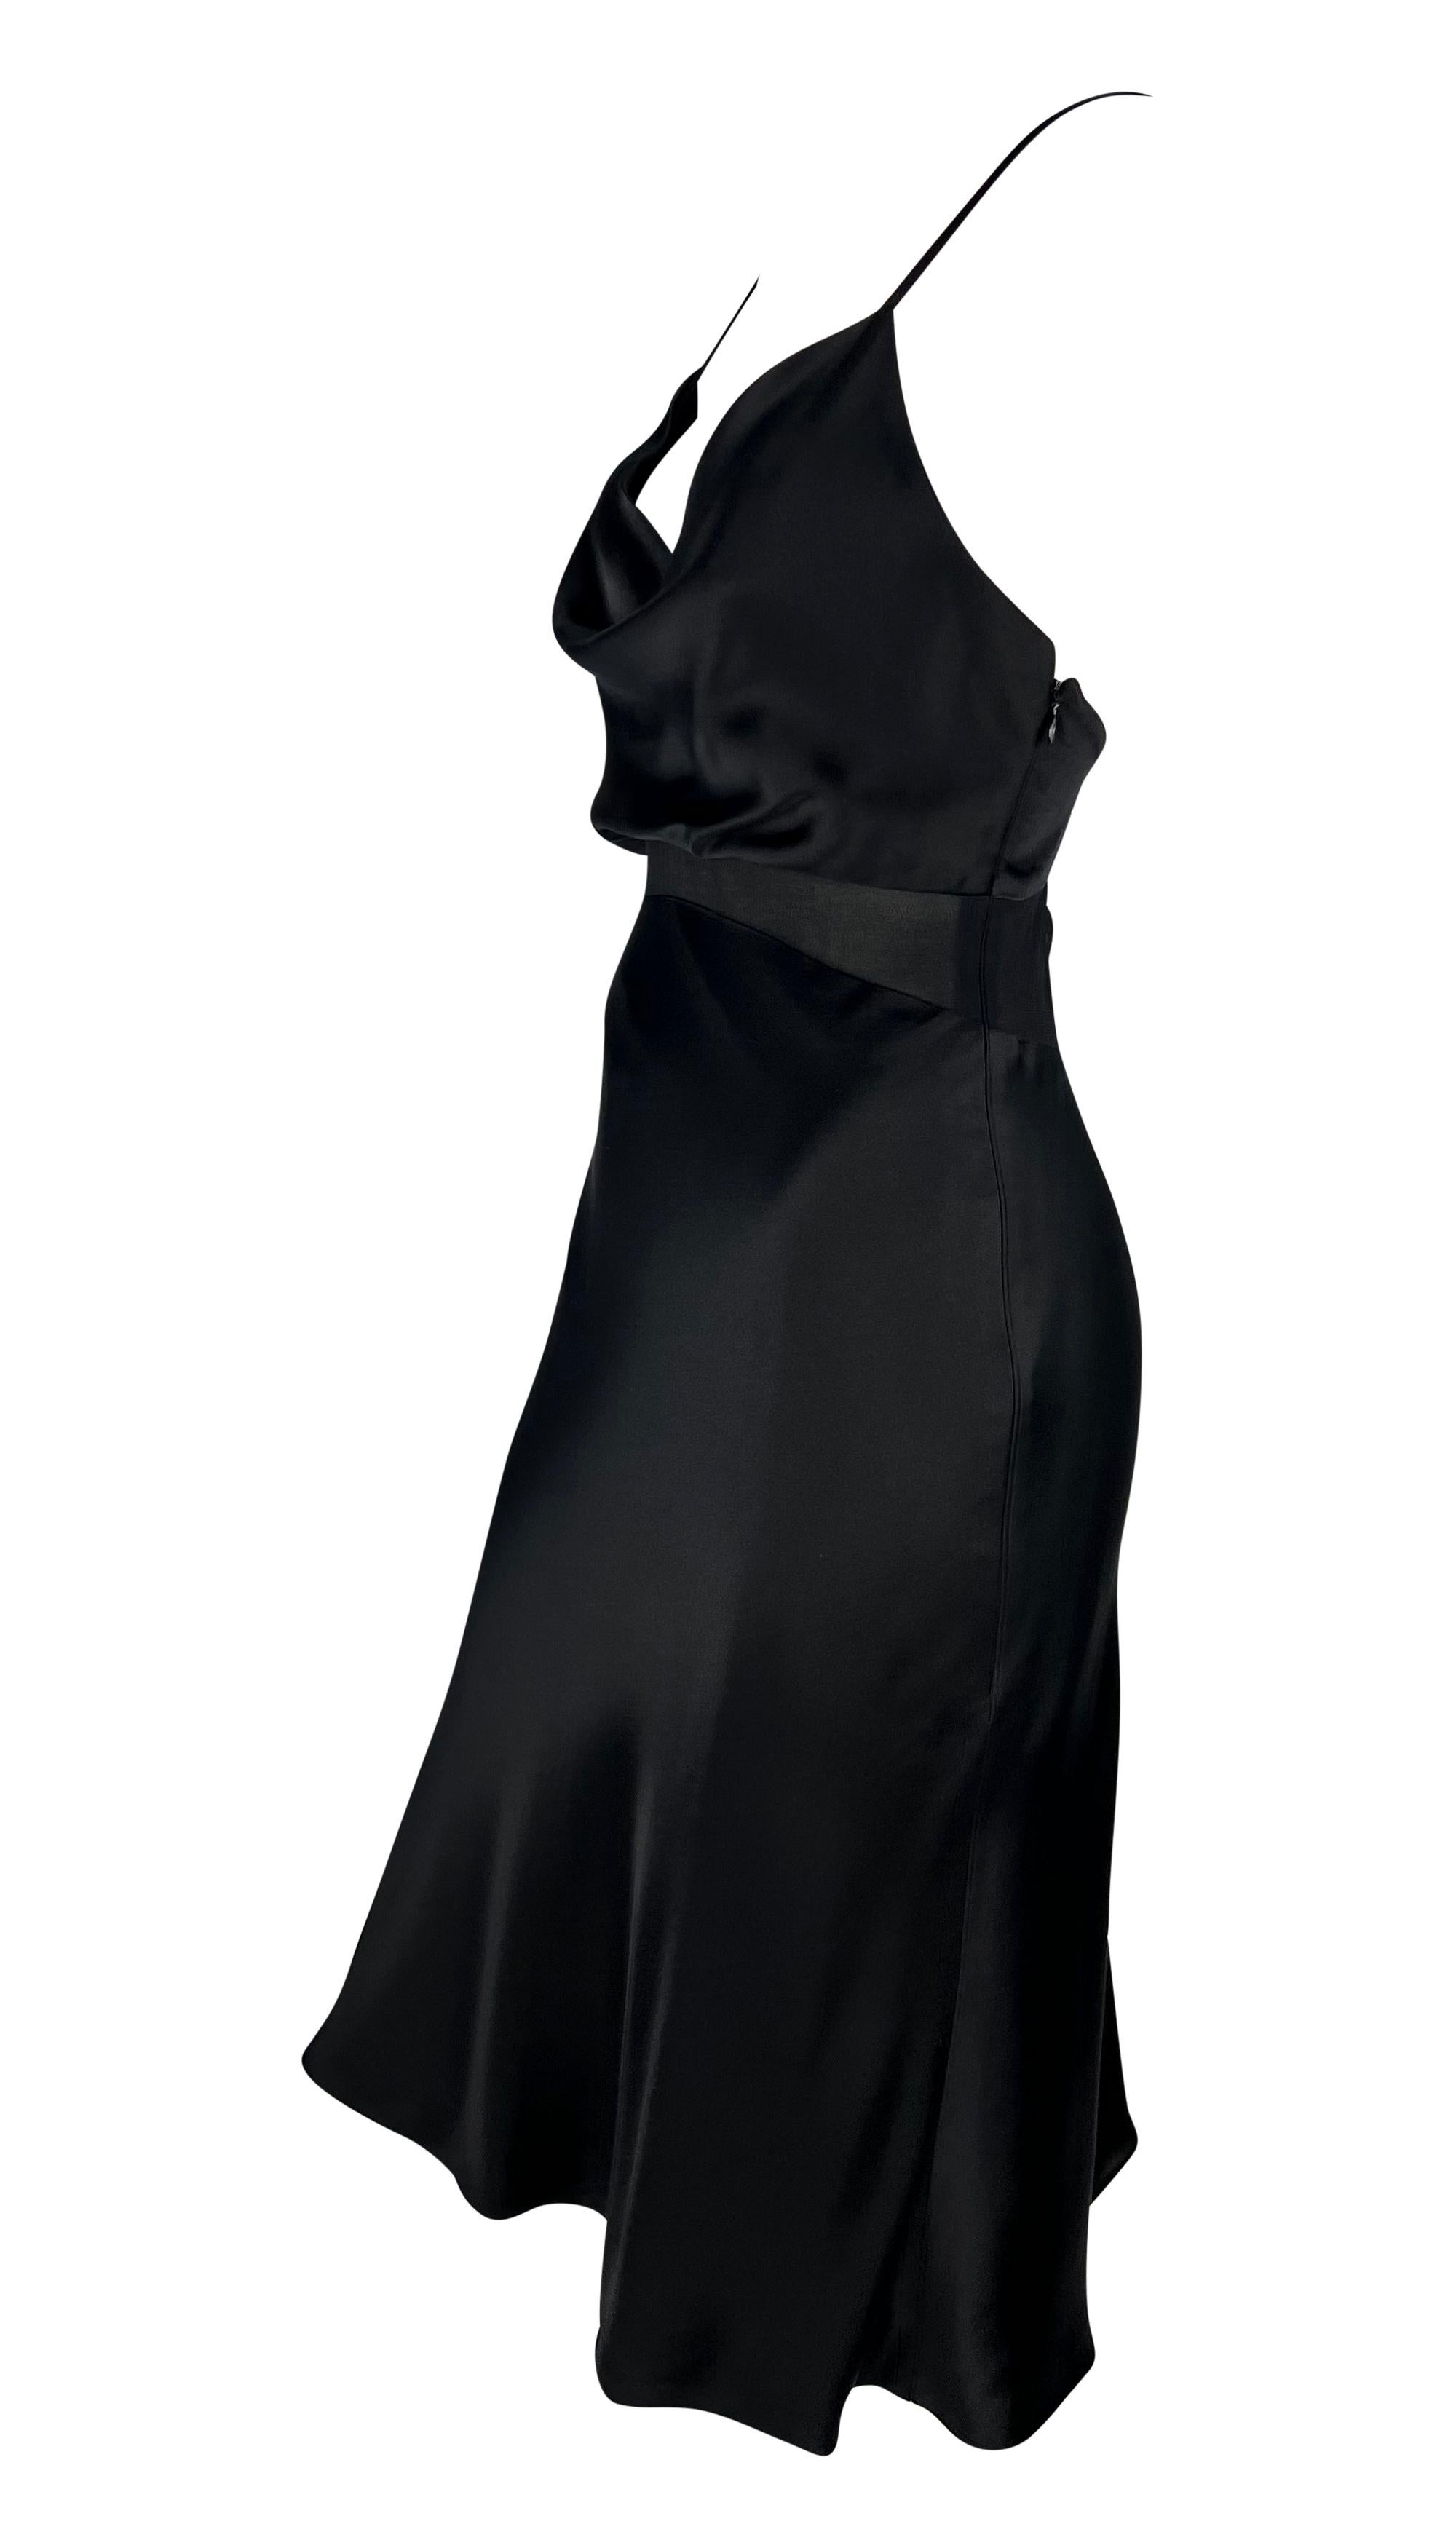 Women's S/S 1997 Gianni Versace Black Satin Cowl Neck Sheer Waist Flare Midi Dress For Sale